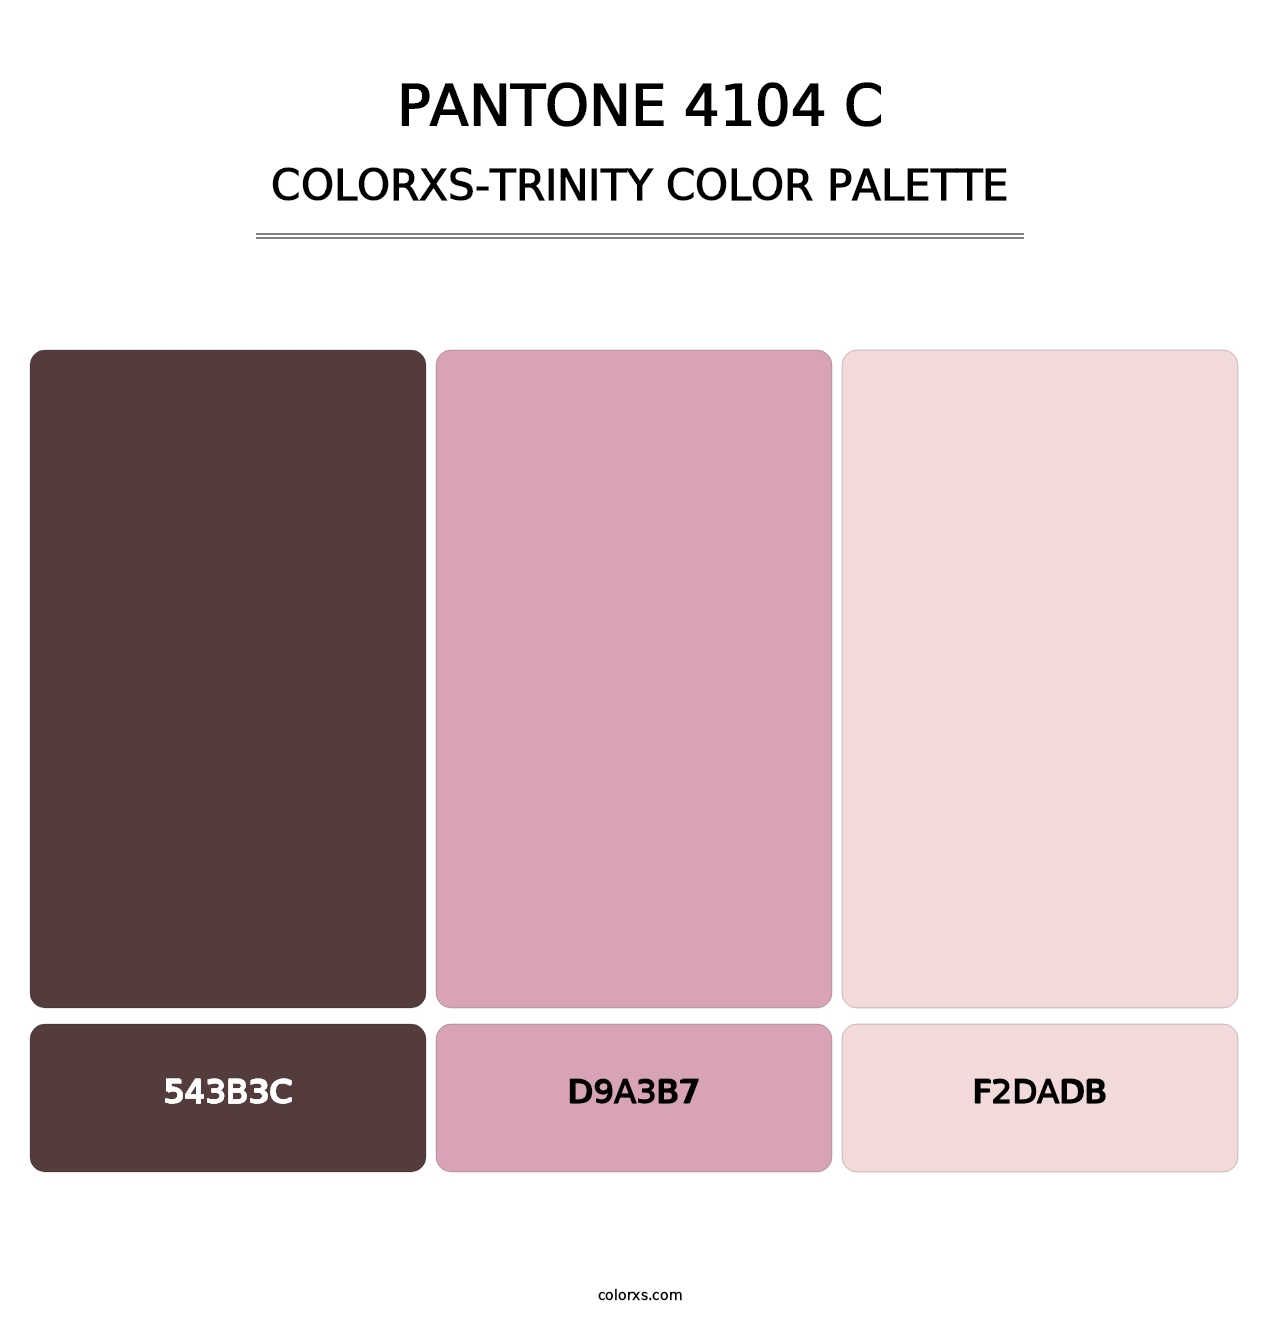 PANTONE 4104 C - Colorxs Trinity Palette